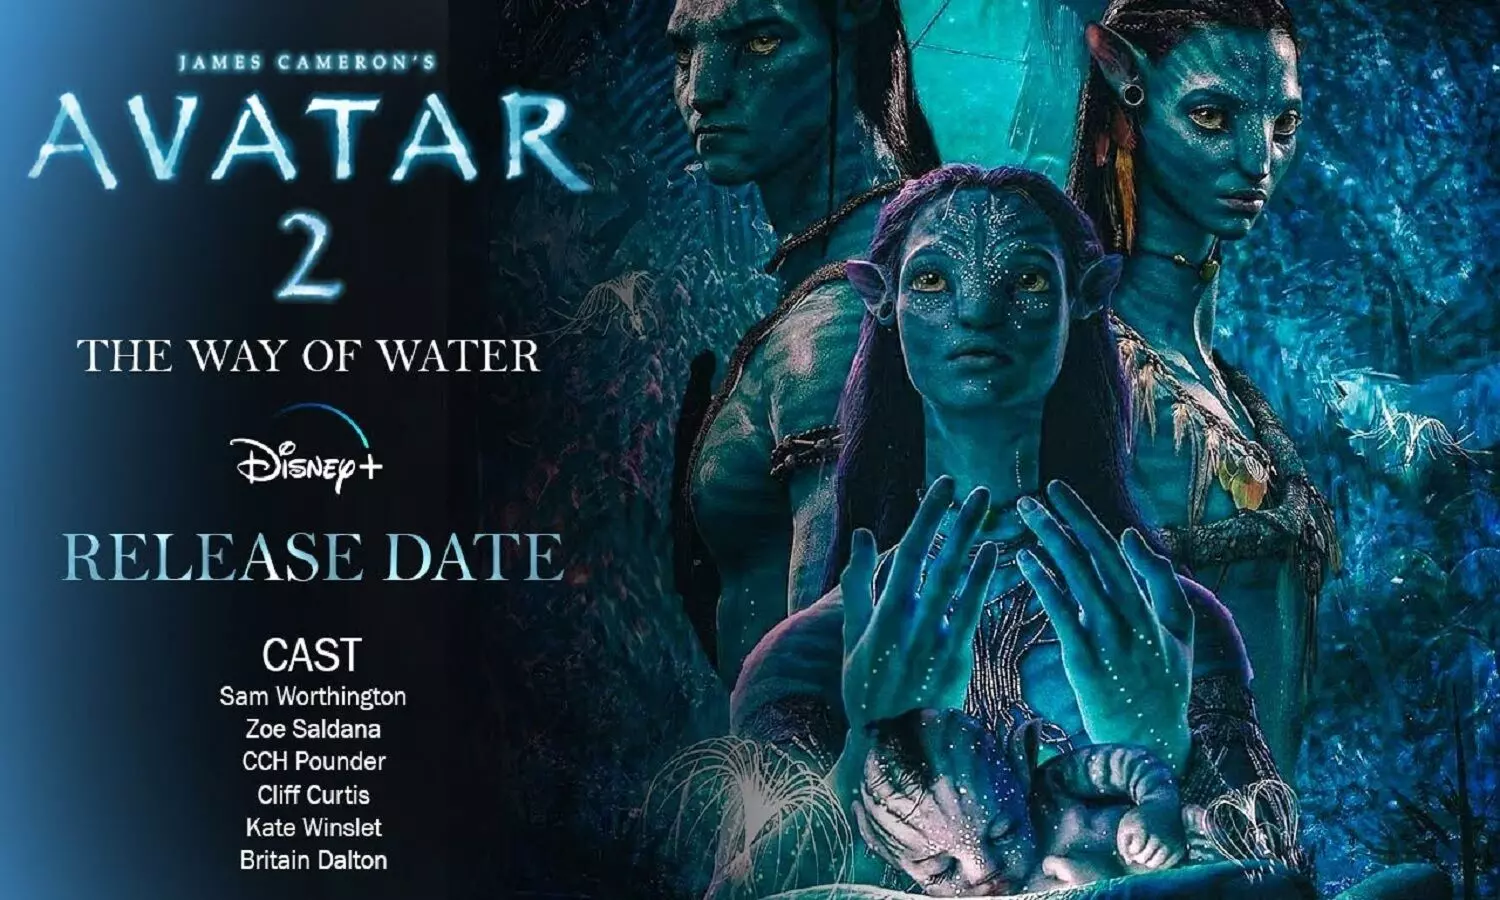 Avatar 2 Day 3 Worldwide Collection: अवतार द वे ऑफ़ वॉटर ने तीसरे दिन कितना कलेक्शन किया